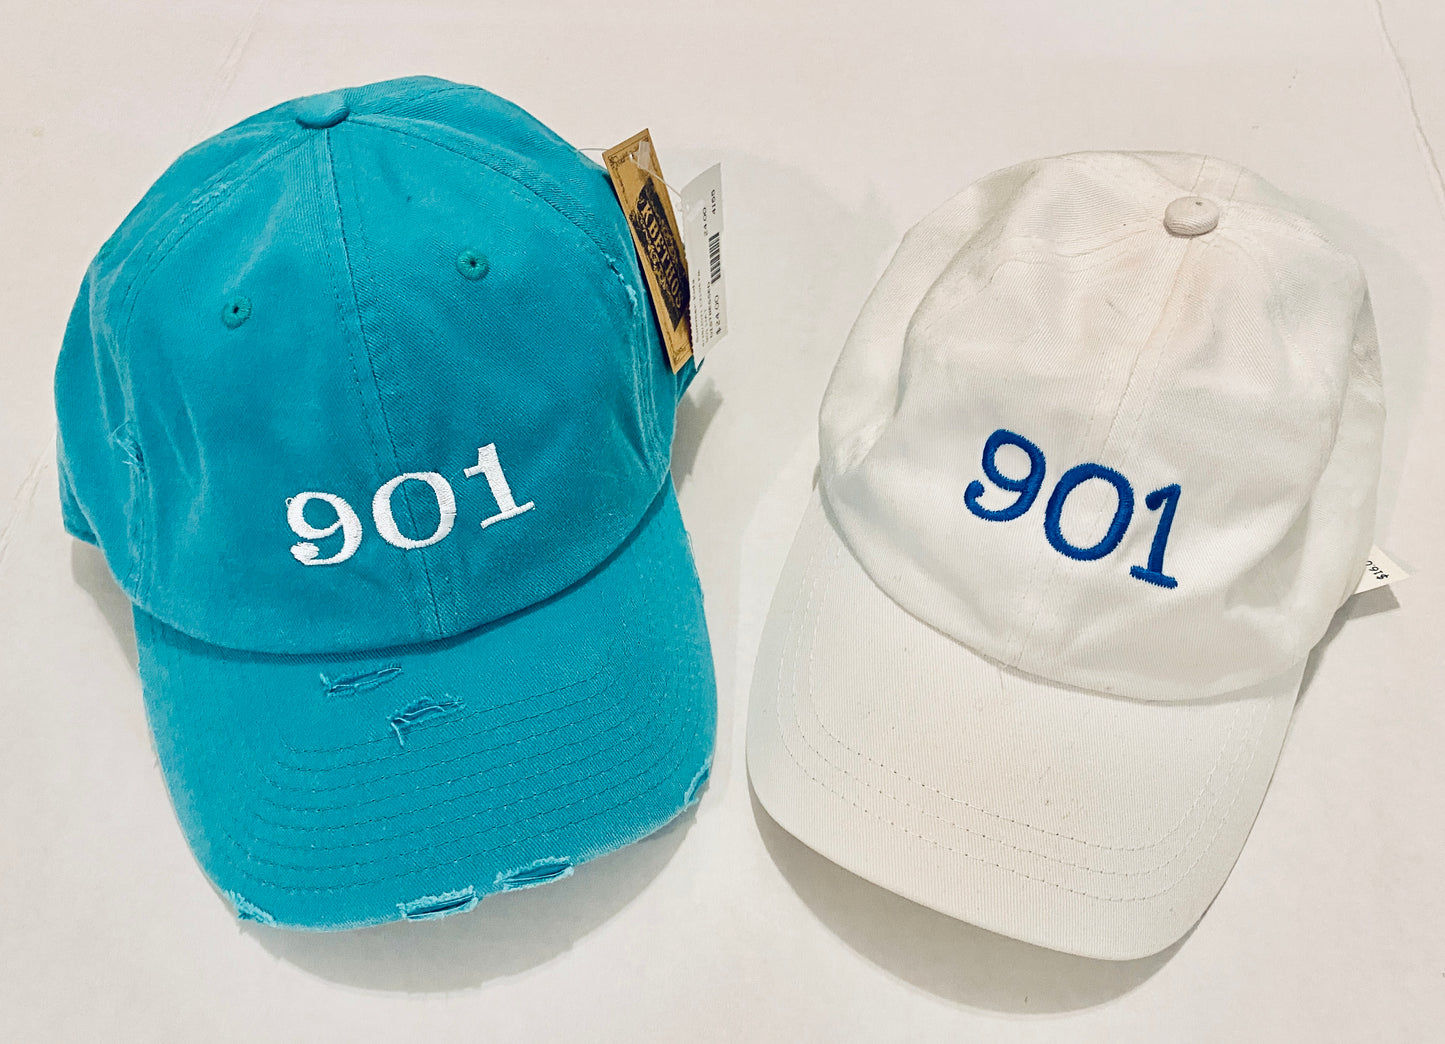 New 901 hats